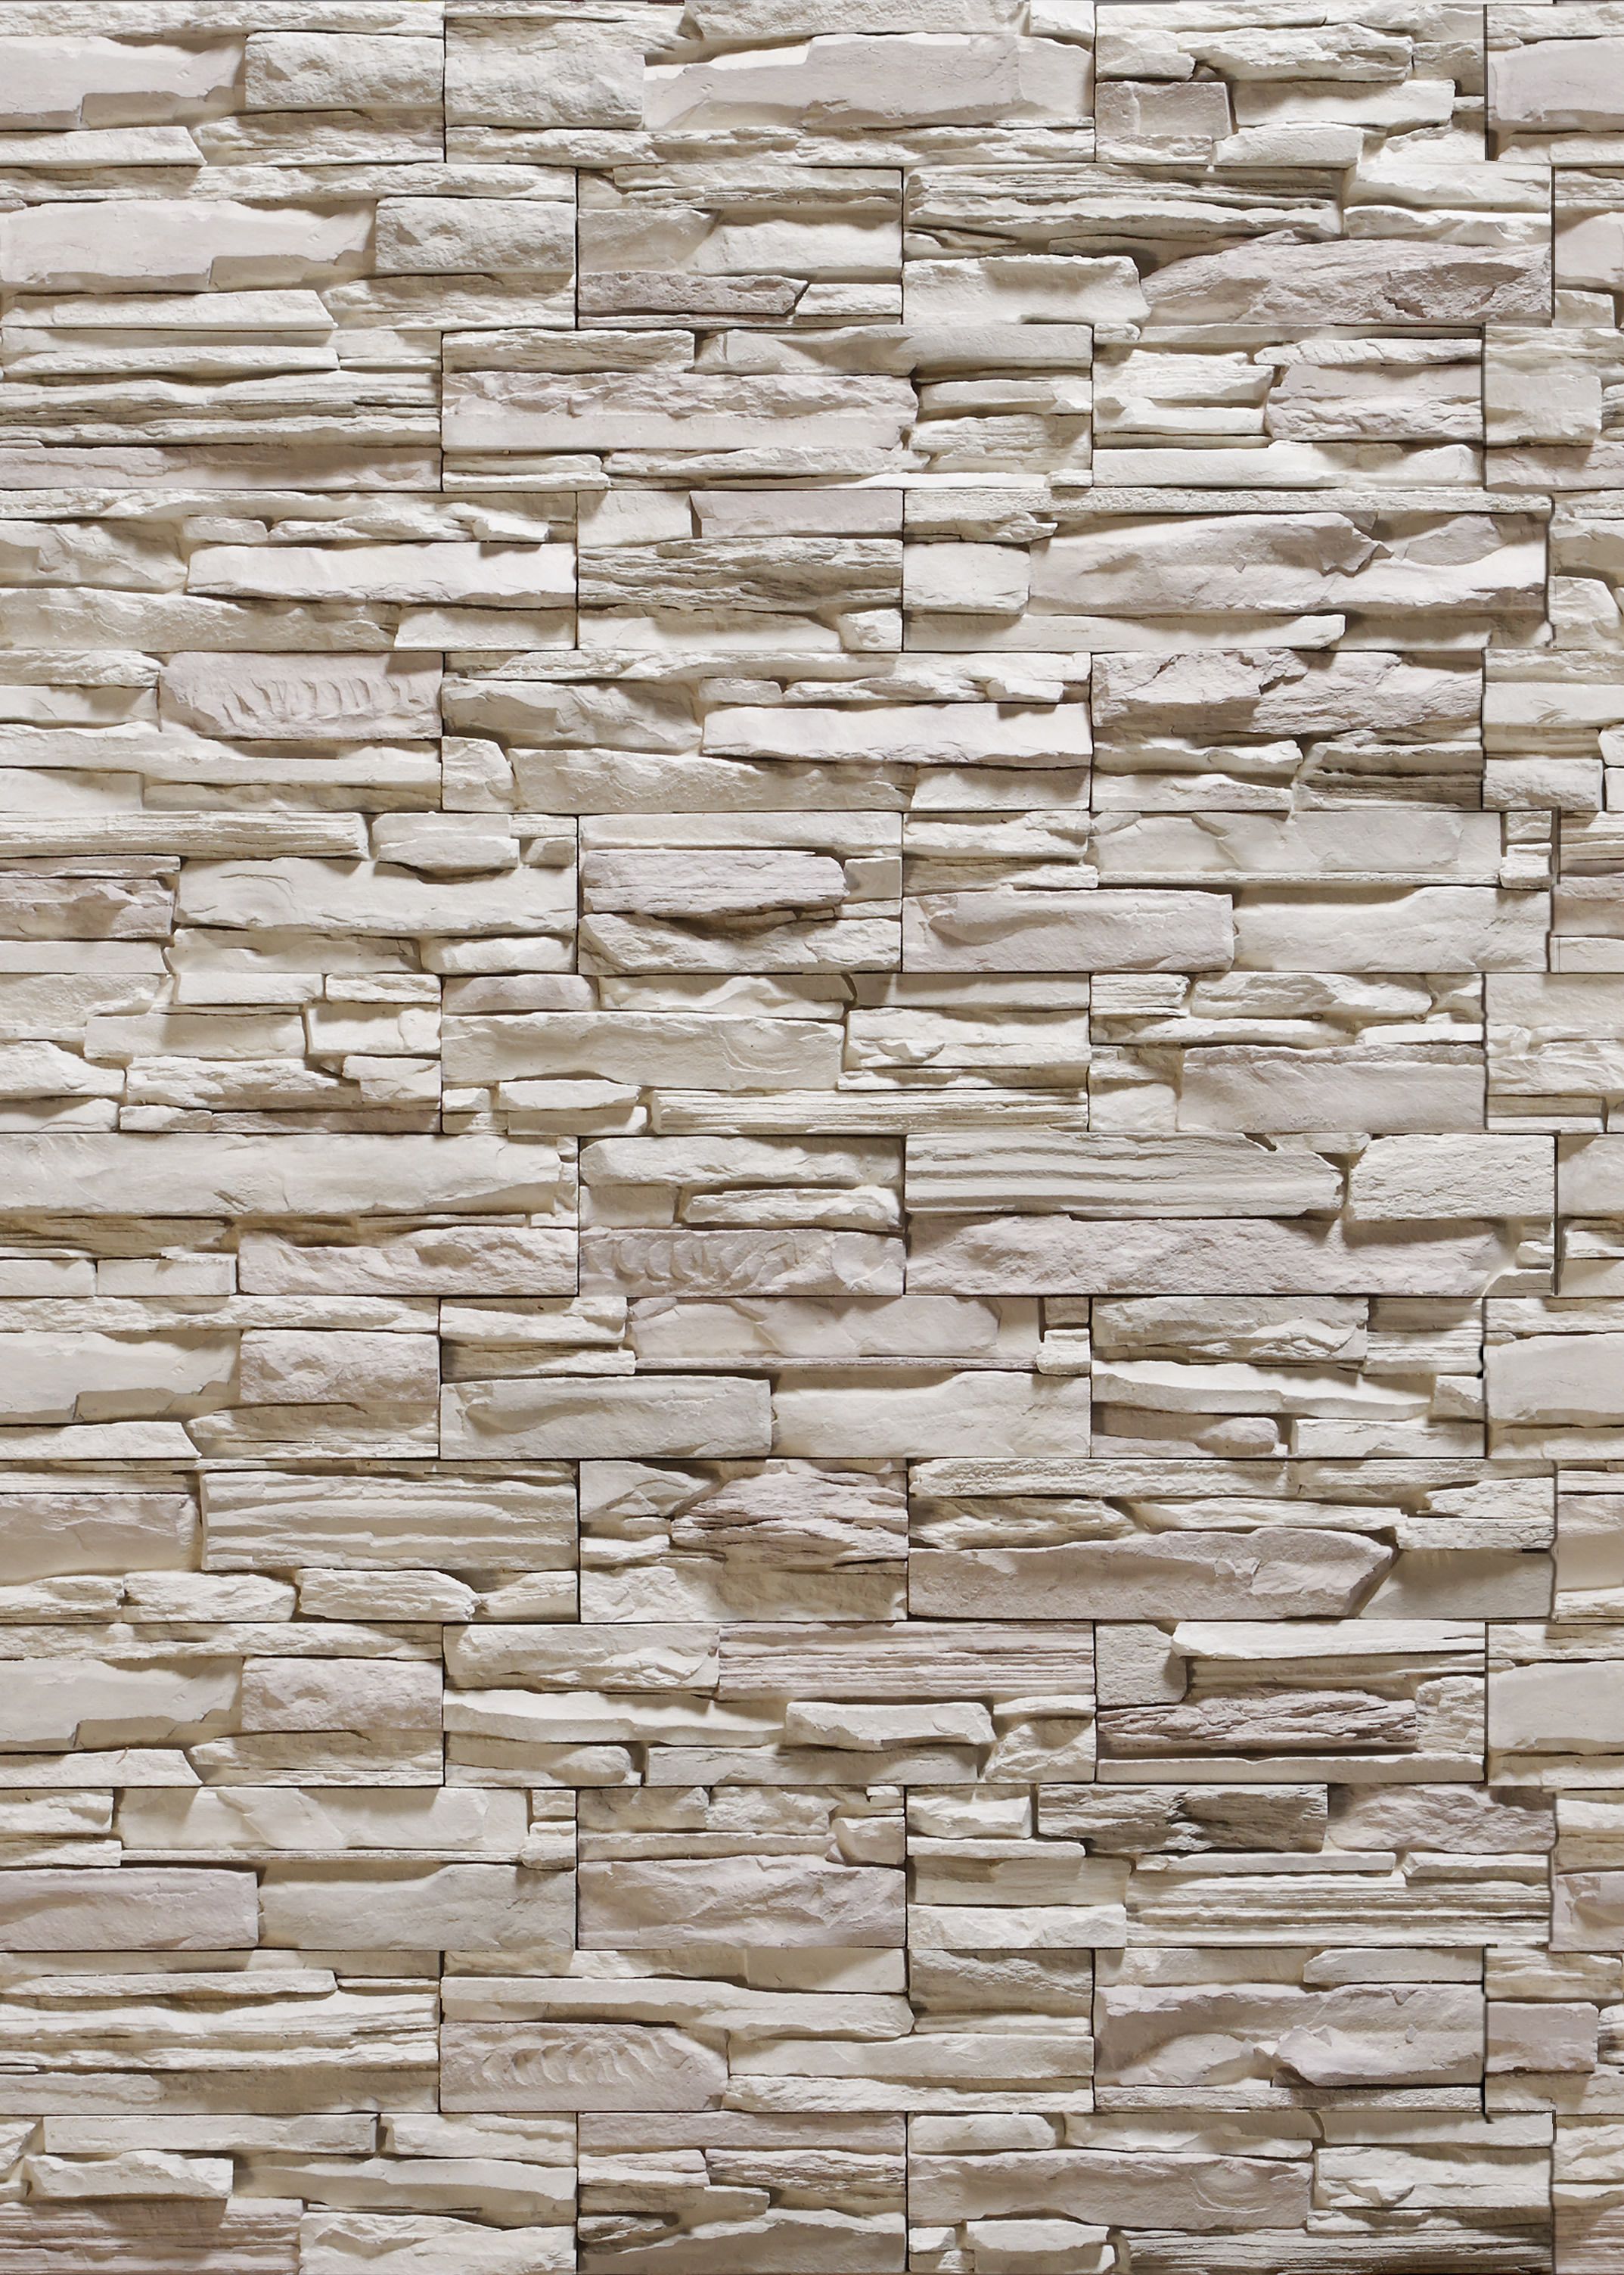 texturas wallpaper,wall,stone wall,beige,brickwork,brick